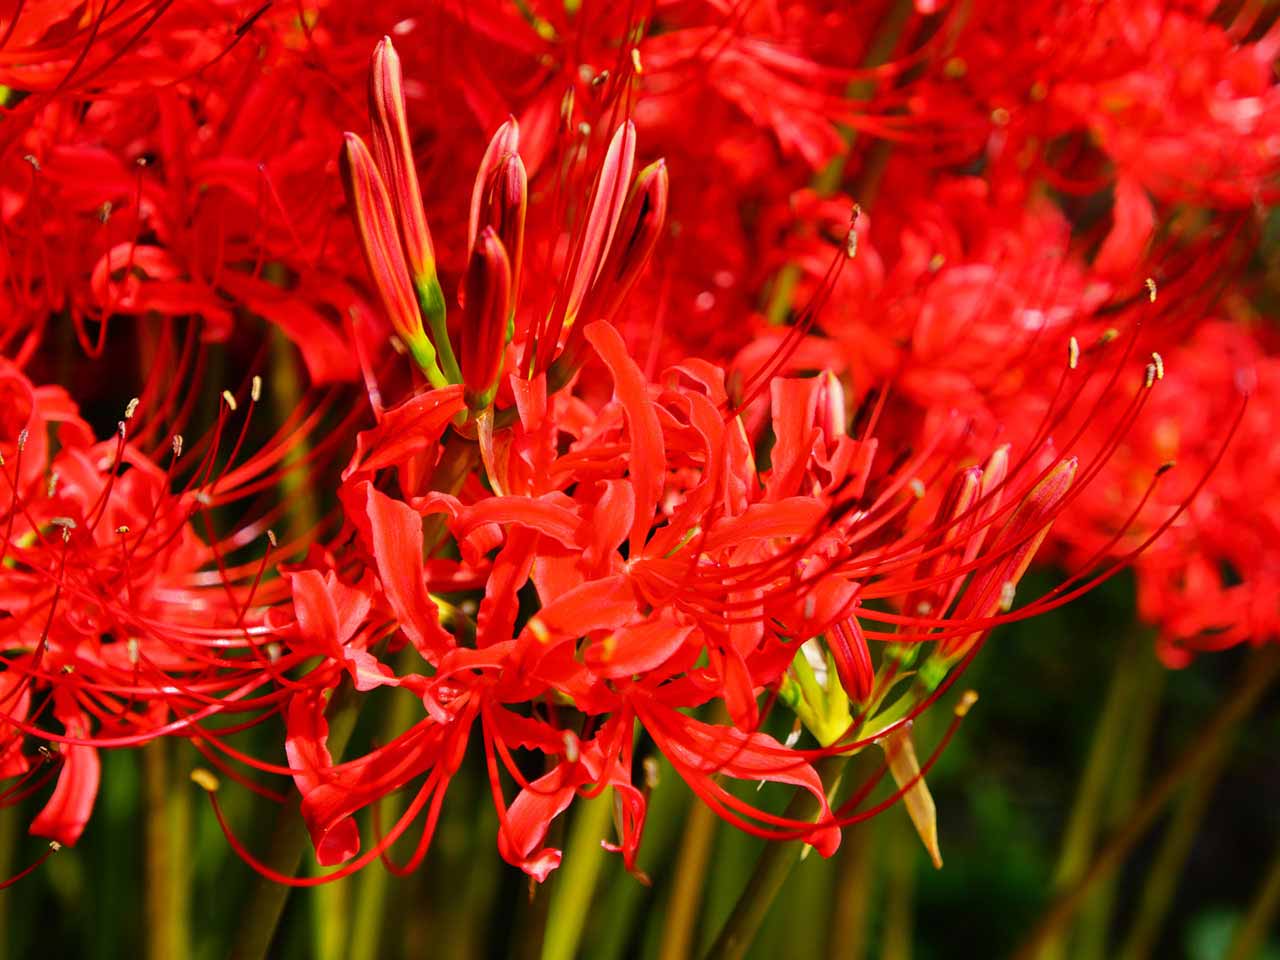 Red hippeastrum plants